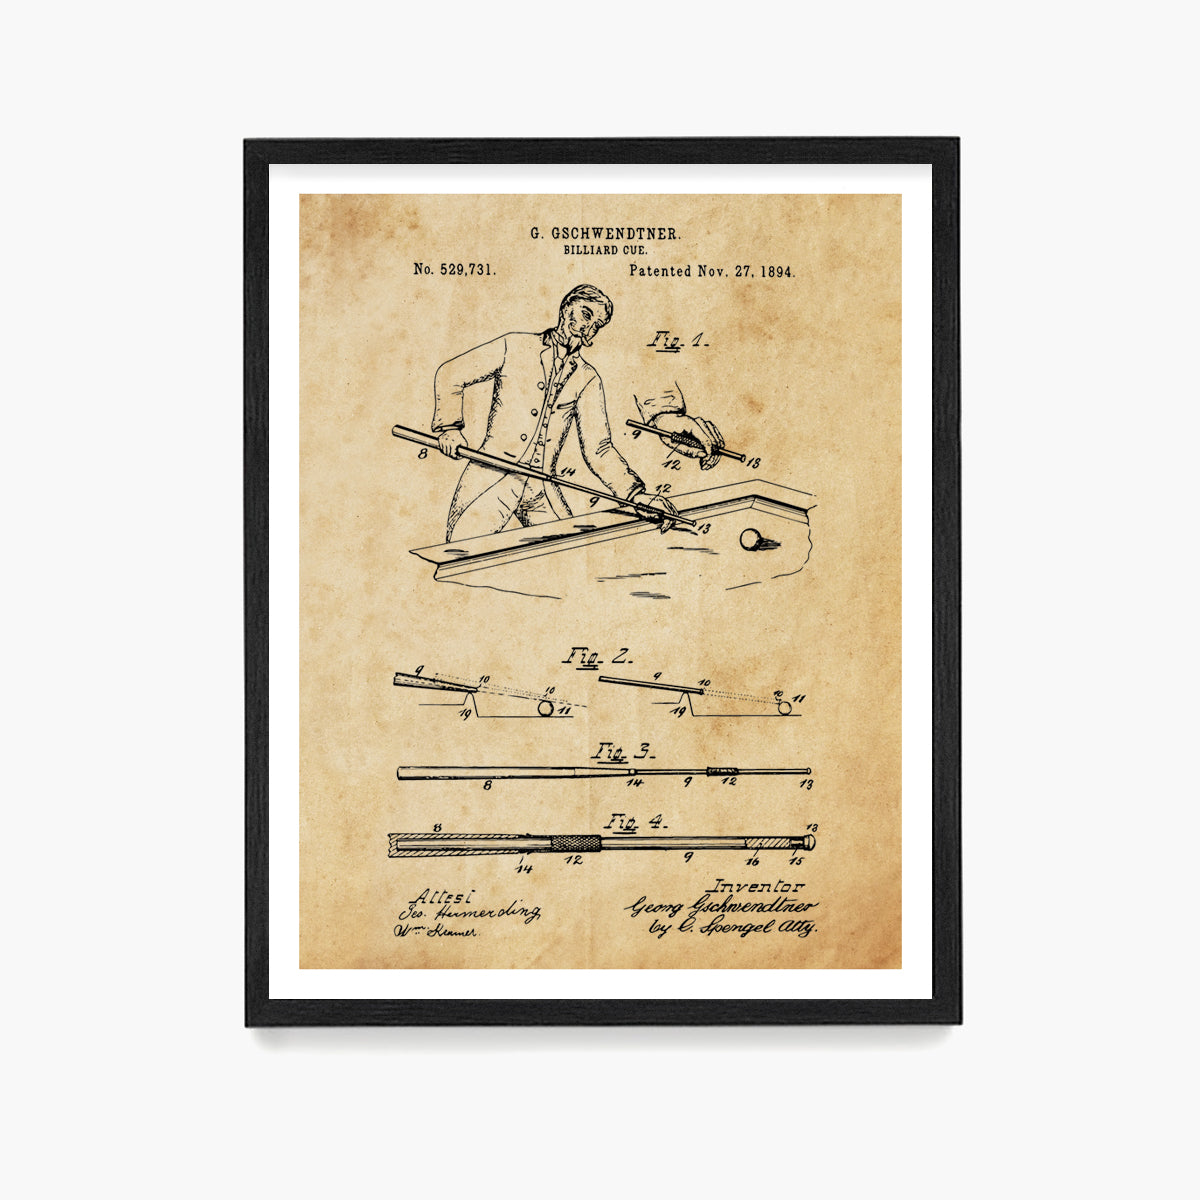 Billiards Cue Patent Poster, Billiards Player Wall Art, Game Room Decor